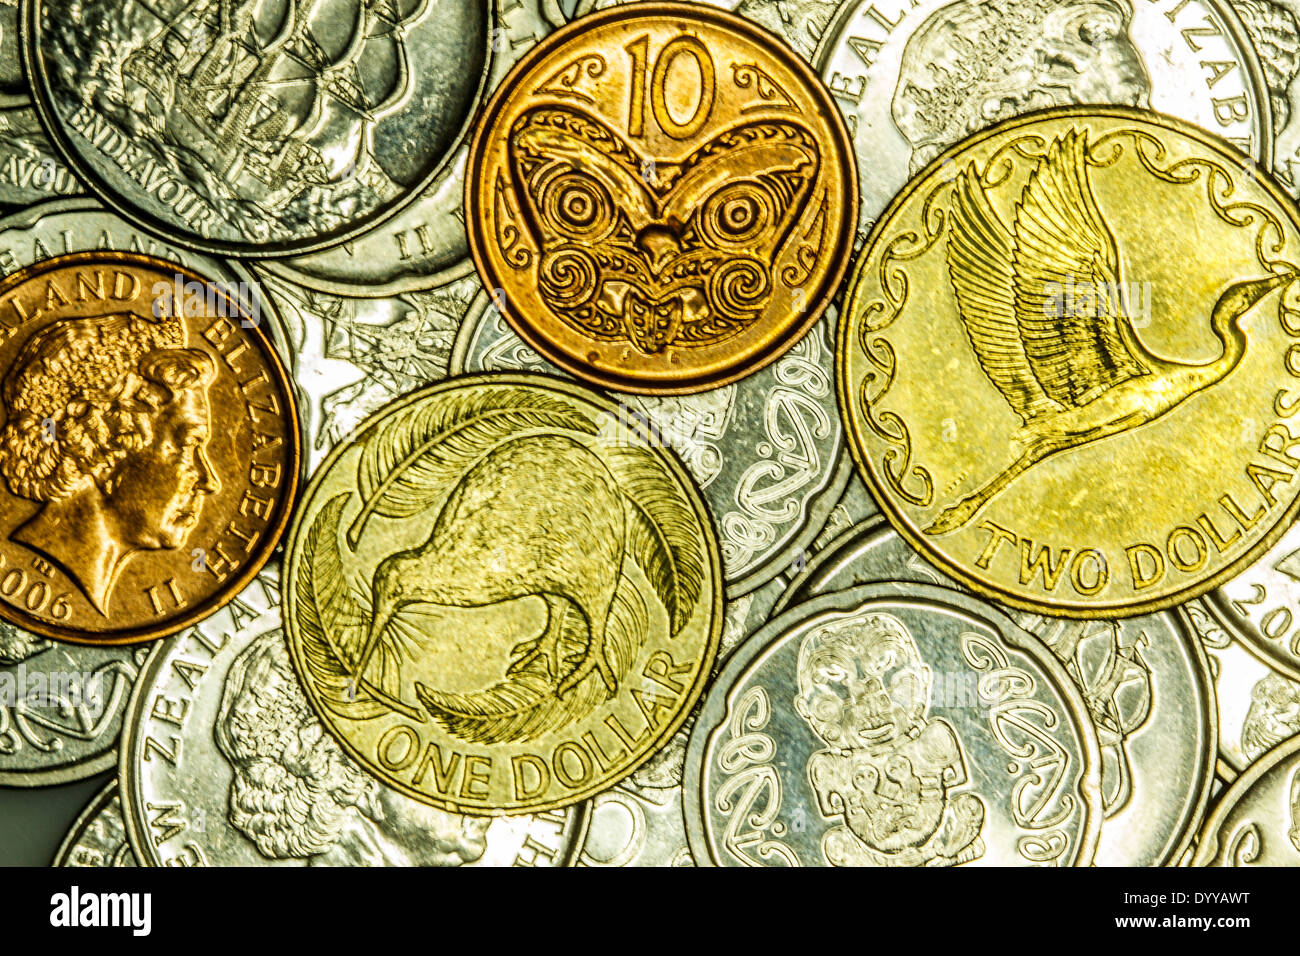 Queen Elizabeth II on New Zealand coinage Stock Photo